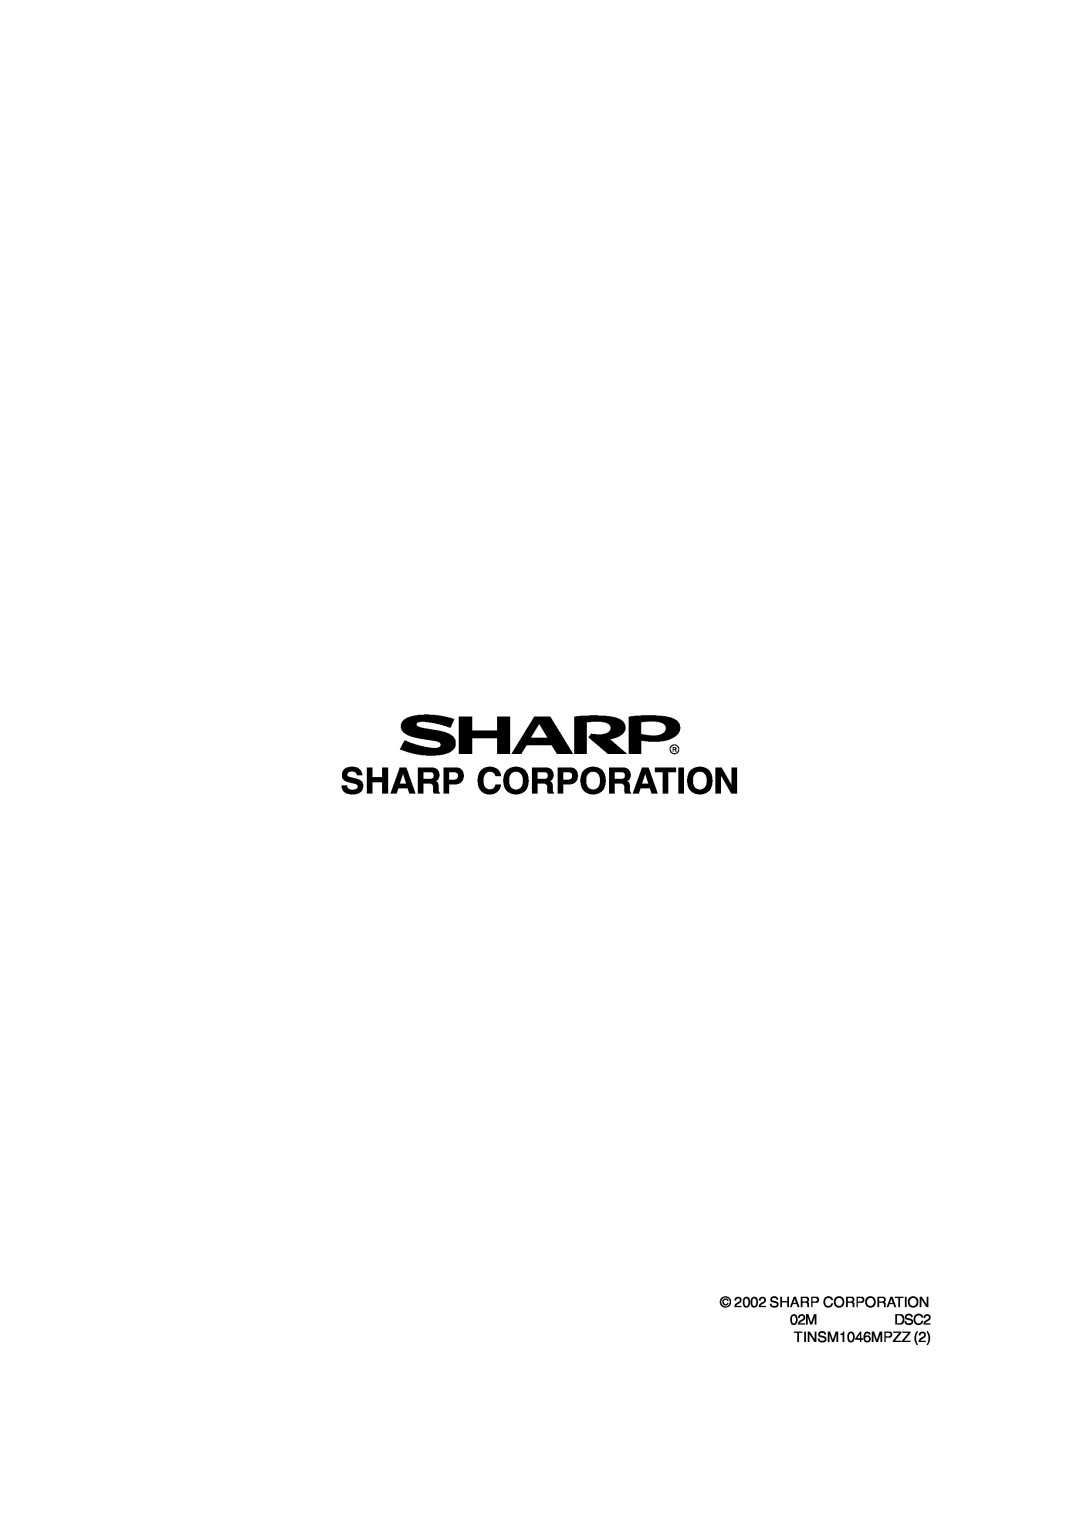 Sharp LL-T2020 operation manual Sharp Corporation, SHARP CORPORATION 02MDSC2 TINSM1046MPZZ 